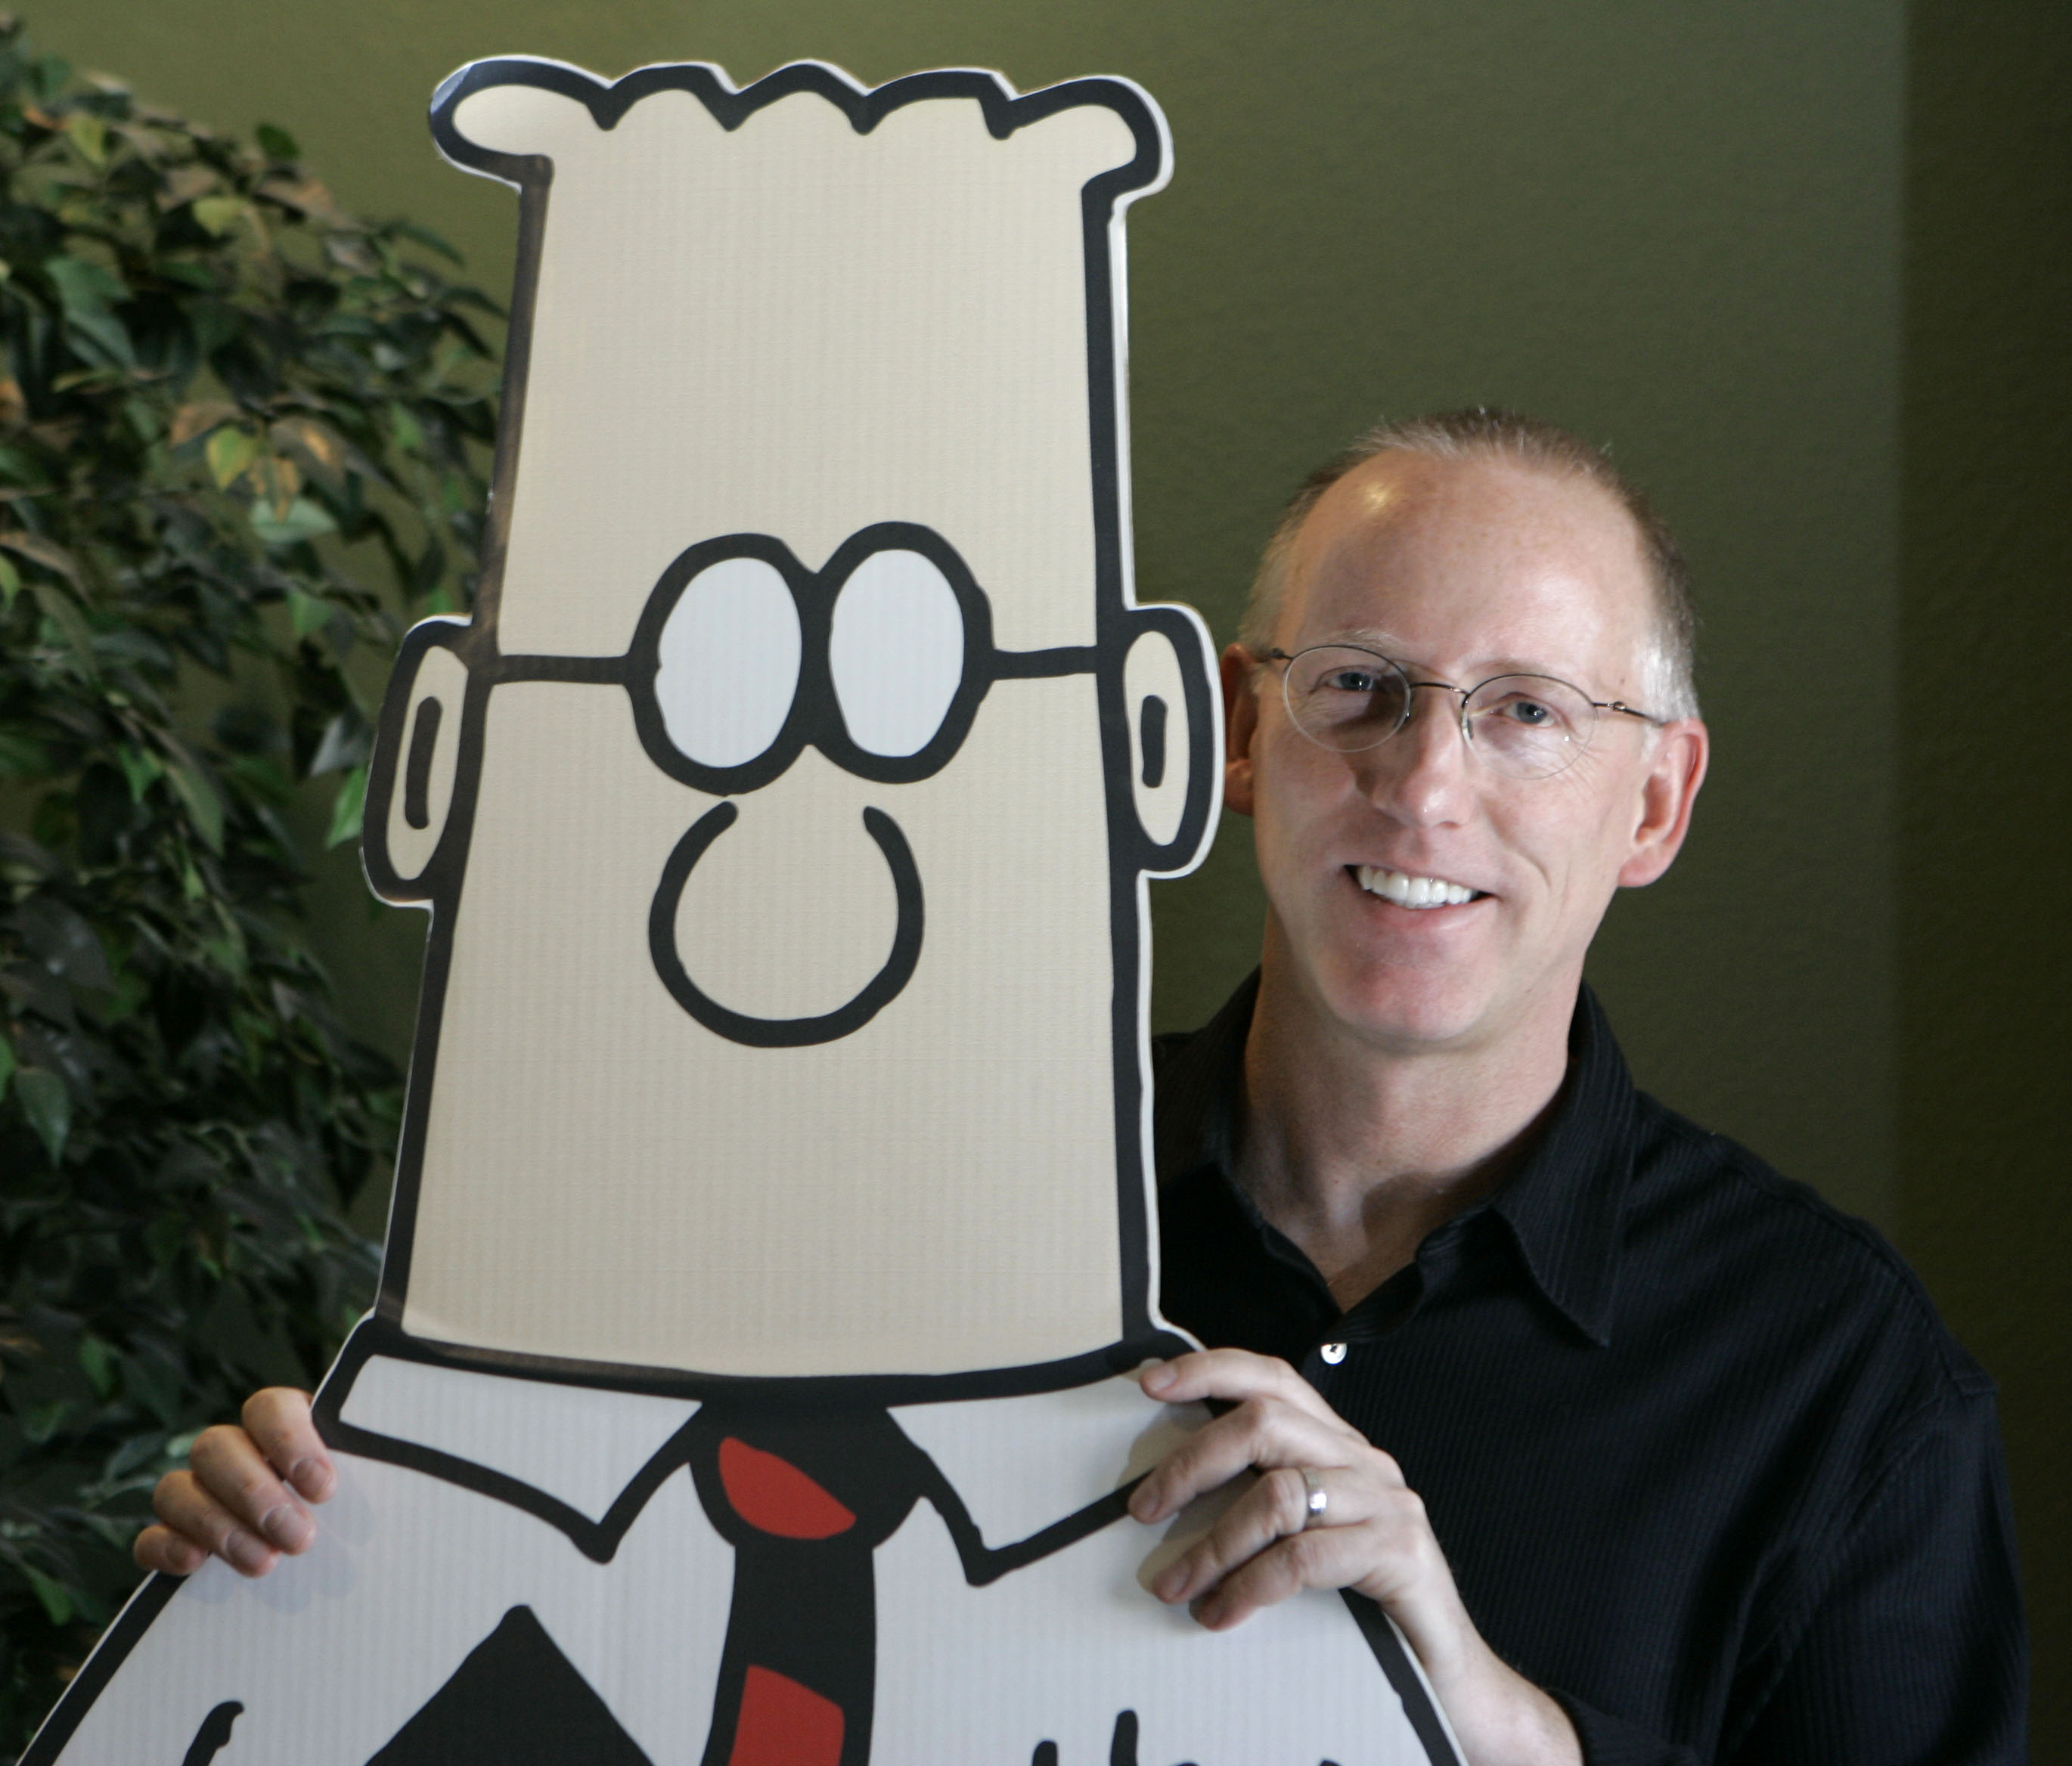 Dilbert Cartoon Porn - Dilbert' newspaper flap brings renewed focus on cartoonist Scott Adams'  many controversies â€“ New York Daily News